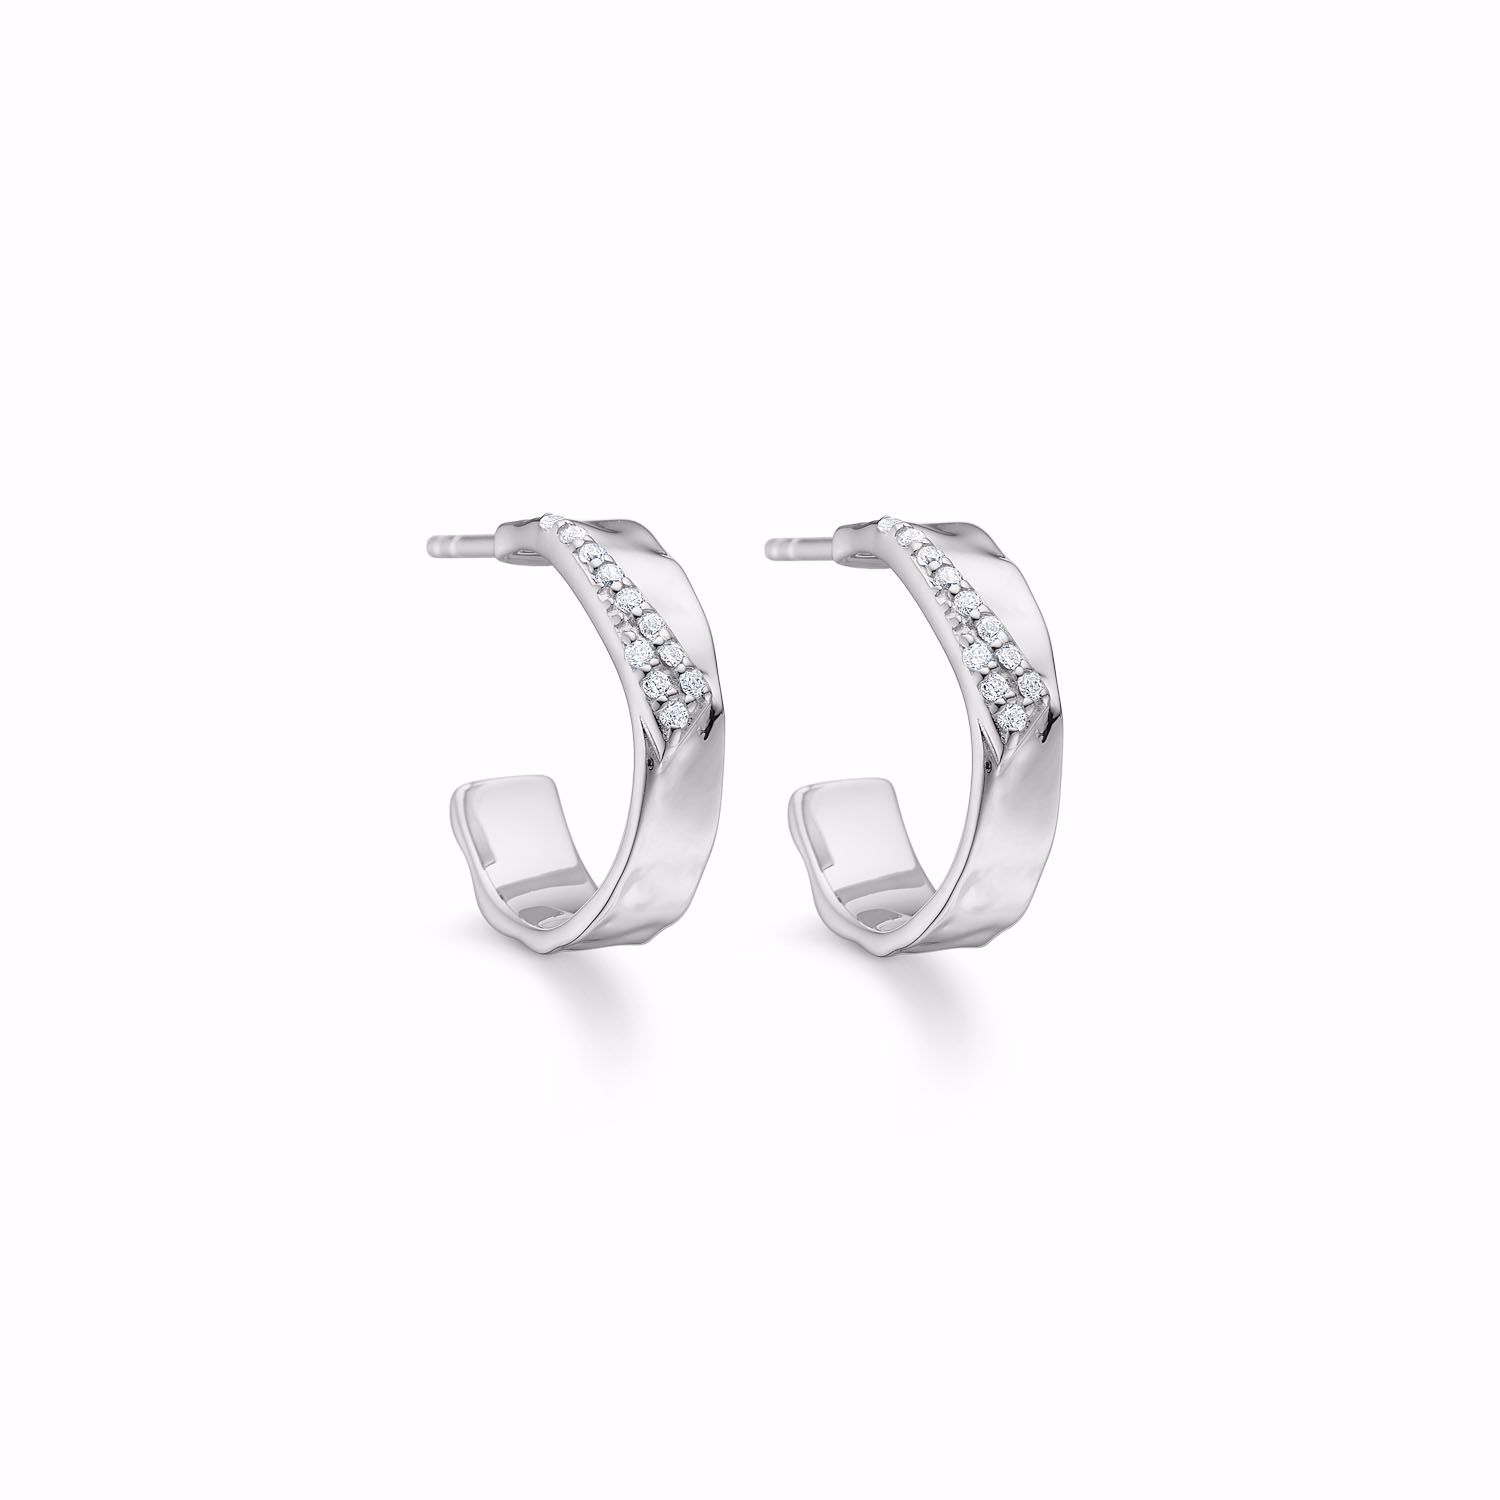 Creol øreringe i sølv med zirkonia sten - Guld & Sølv Design 2026/1